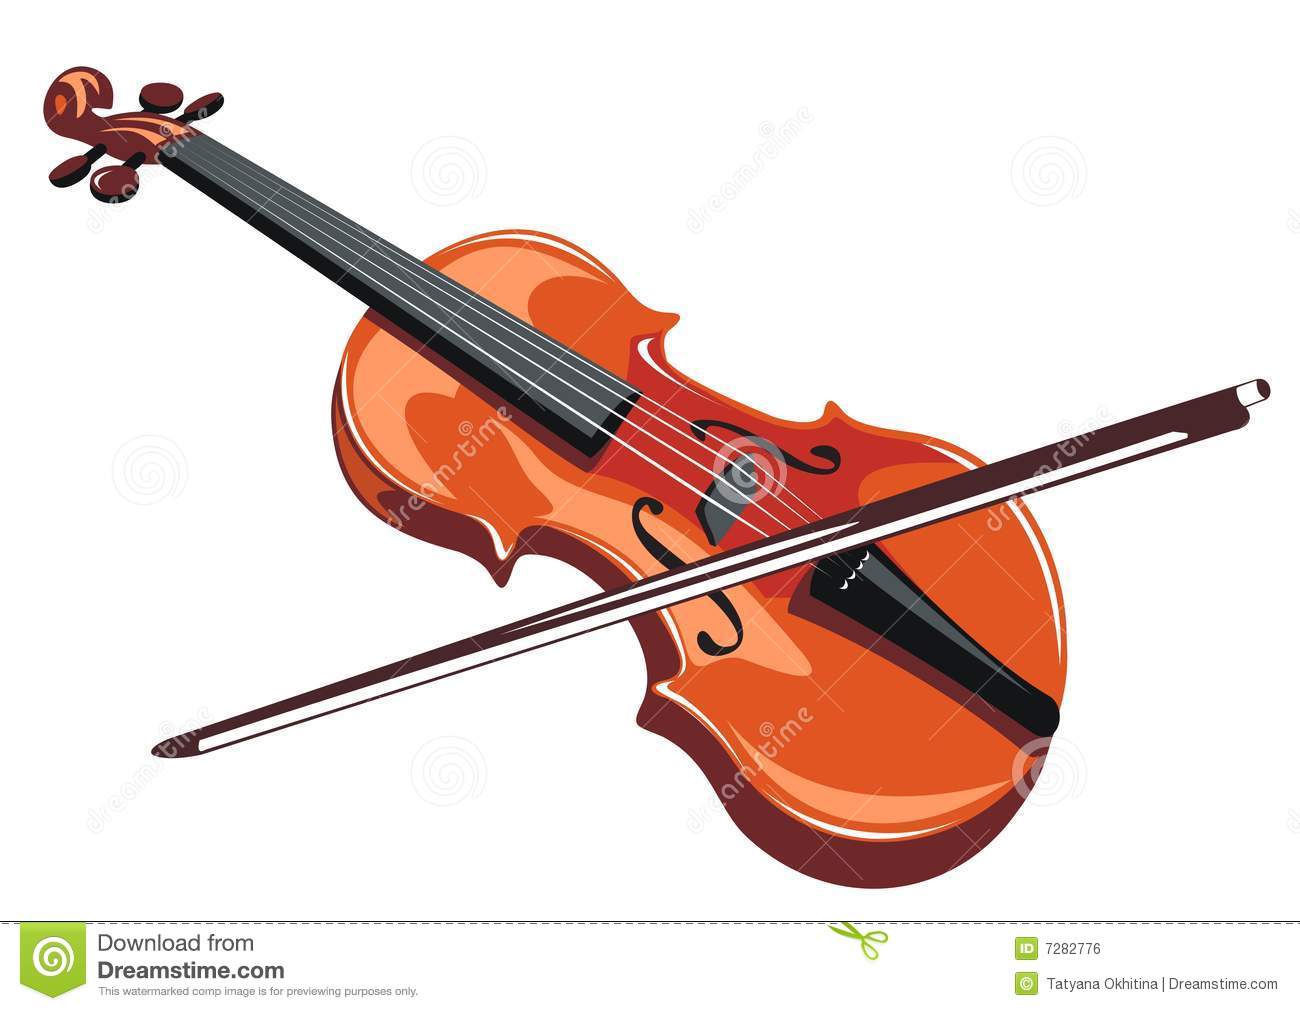 Violin clip art Free vector 1